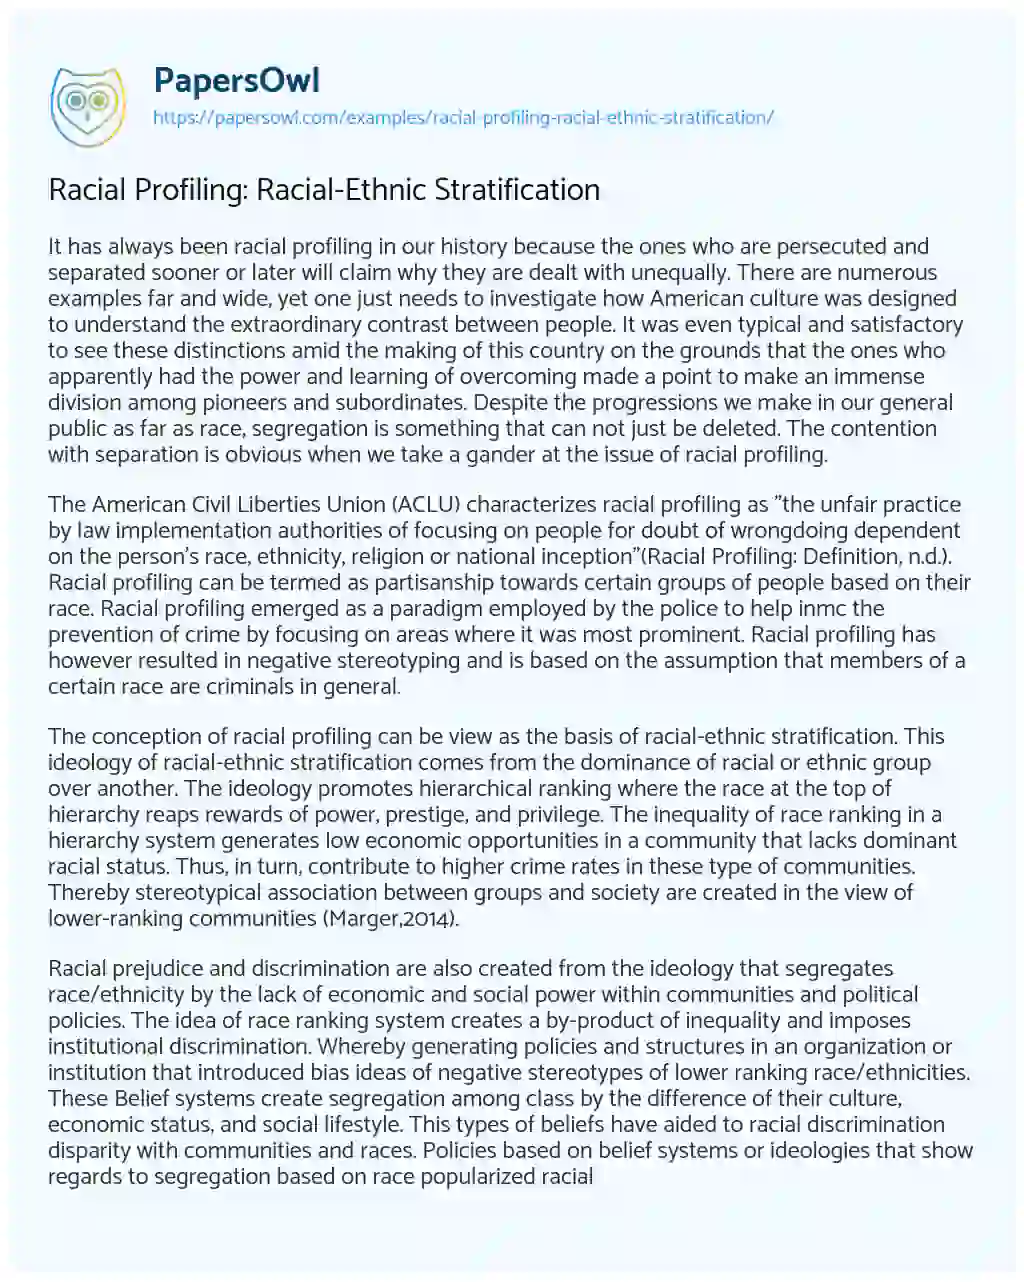 Essay on Racial Profiling: Racial-Ethnic Stratification